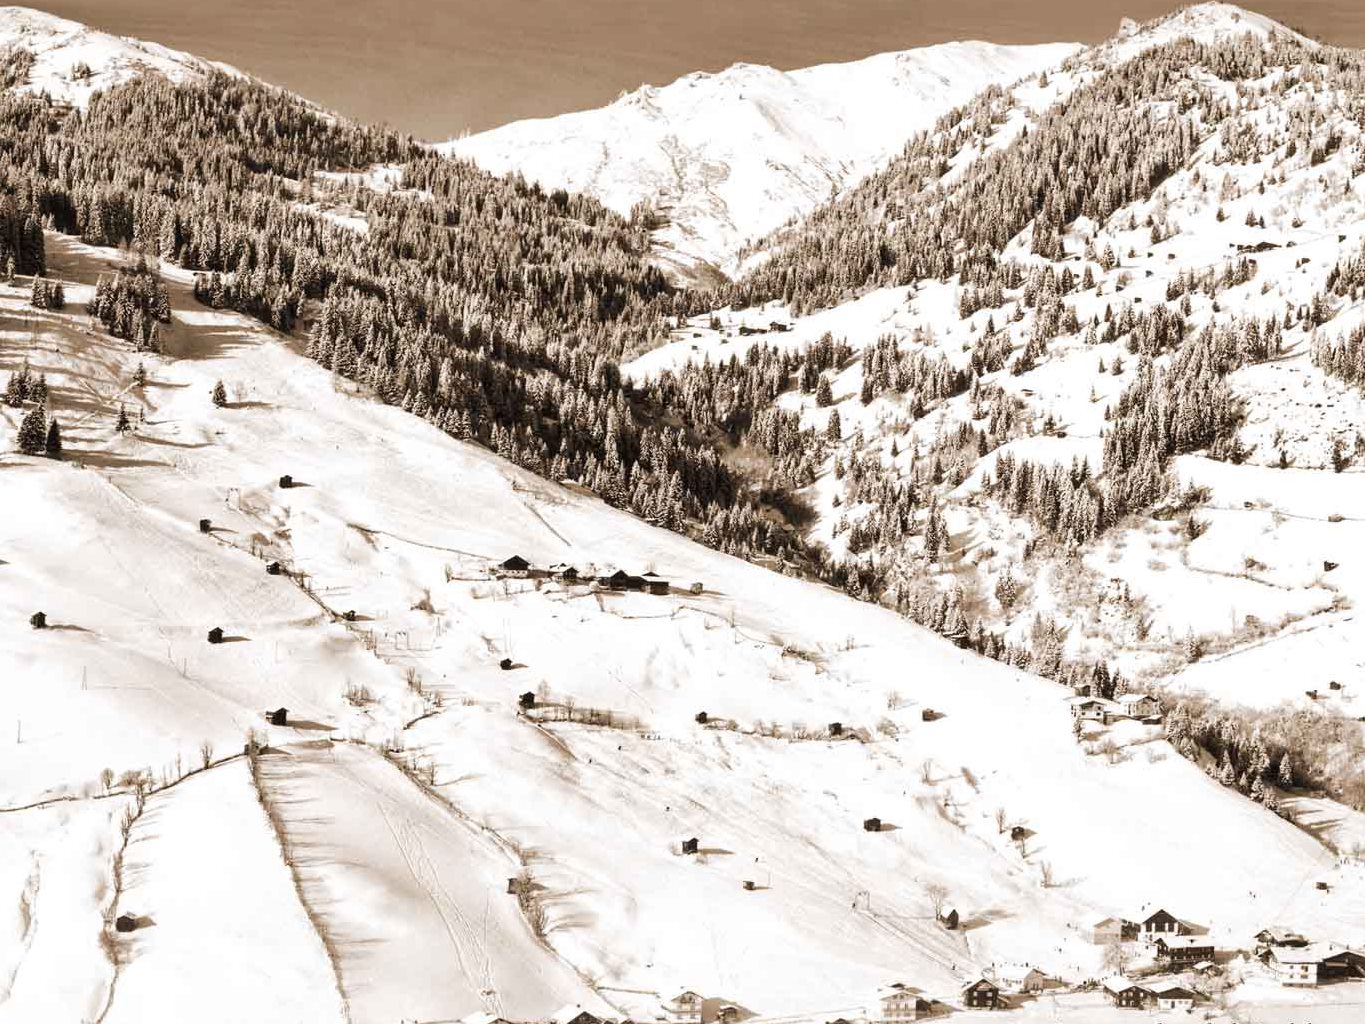 Skigebiet Großarltal Ende 1960 - Bild: Hubert Heigl, www.glasheigl.at